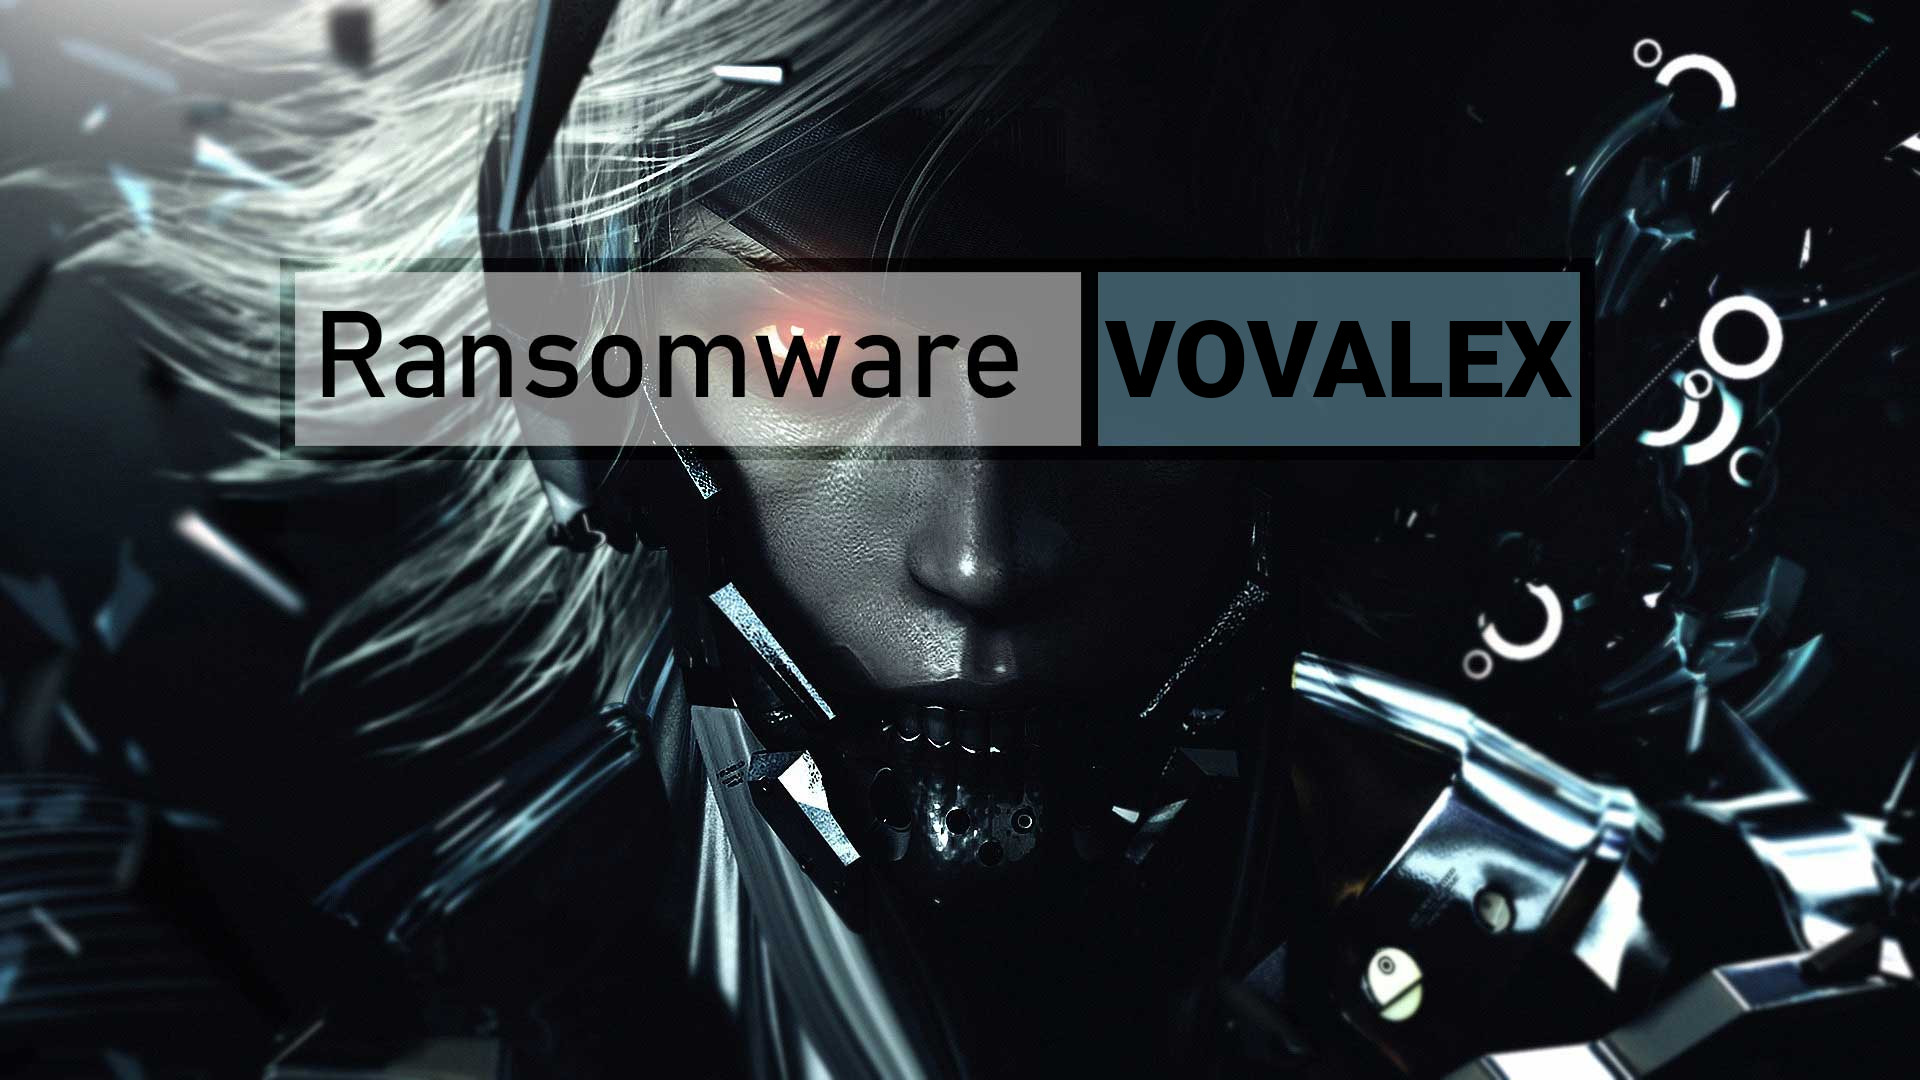 Vovalex Ransomware